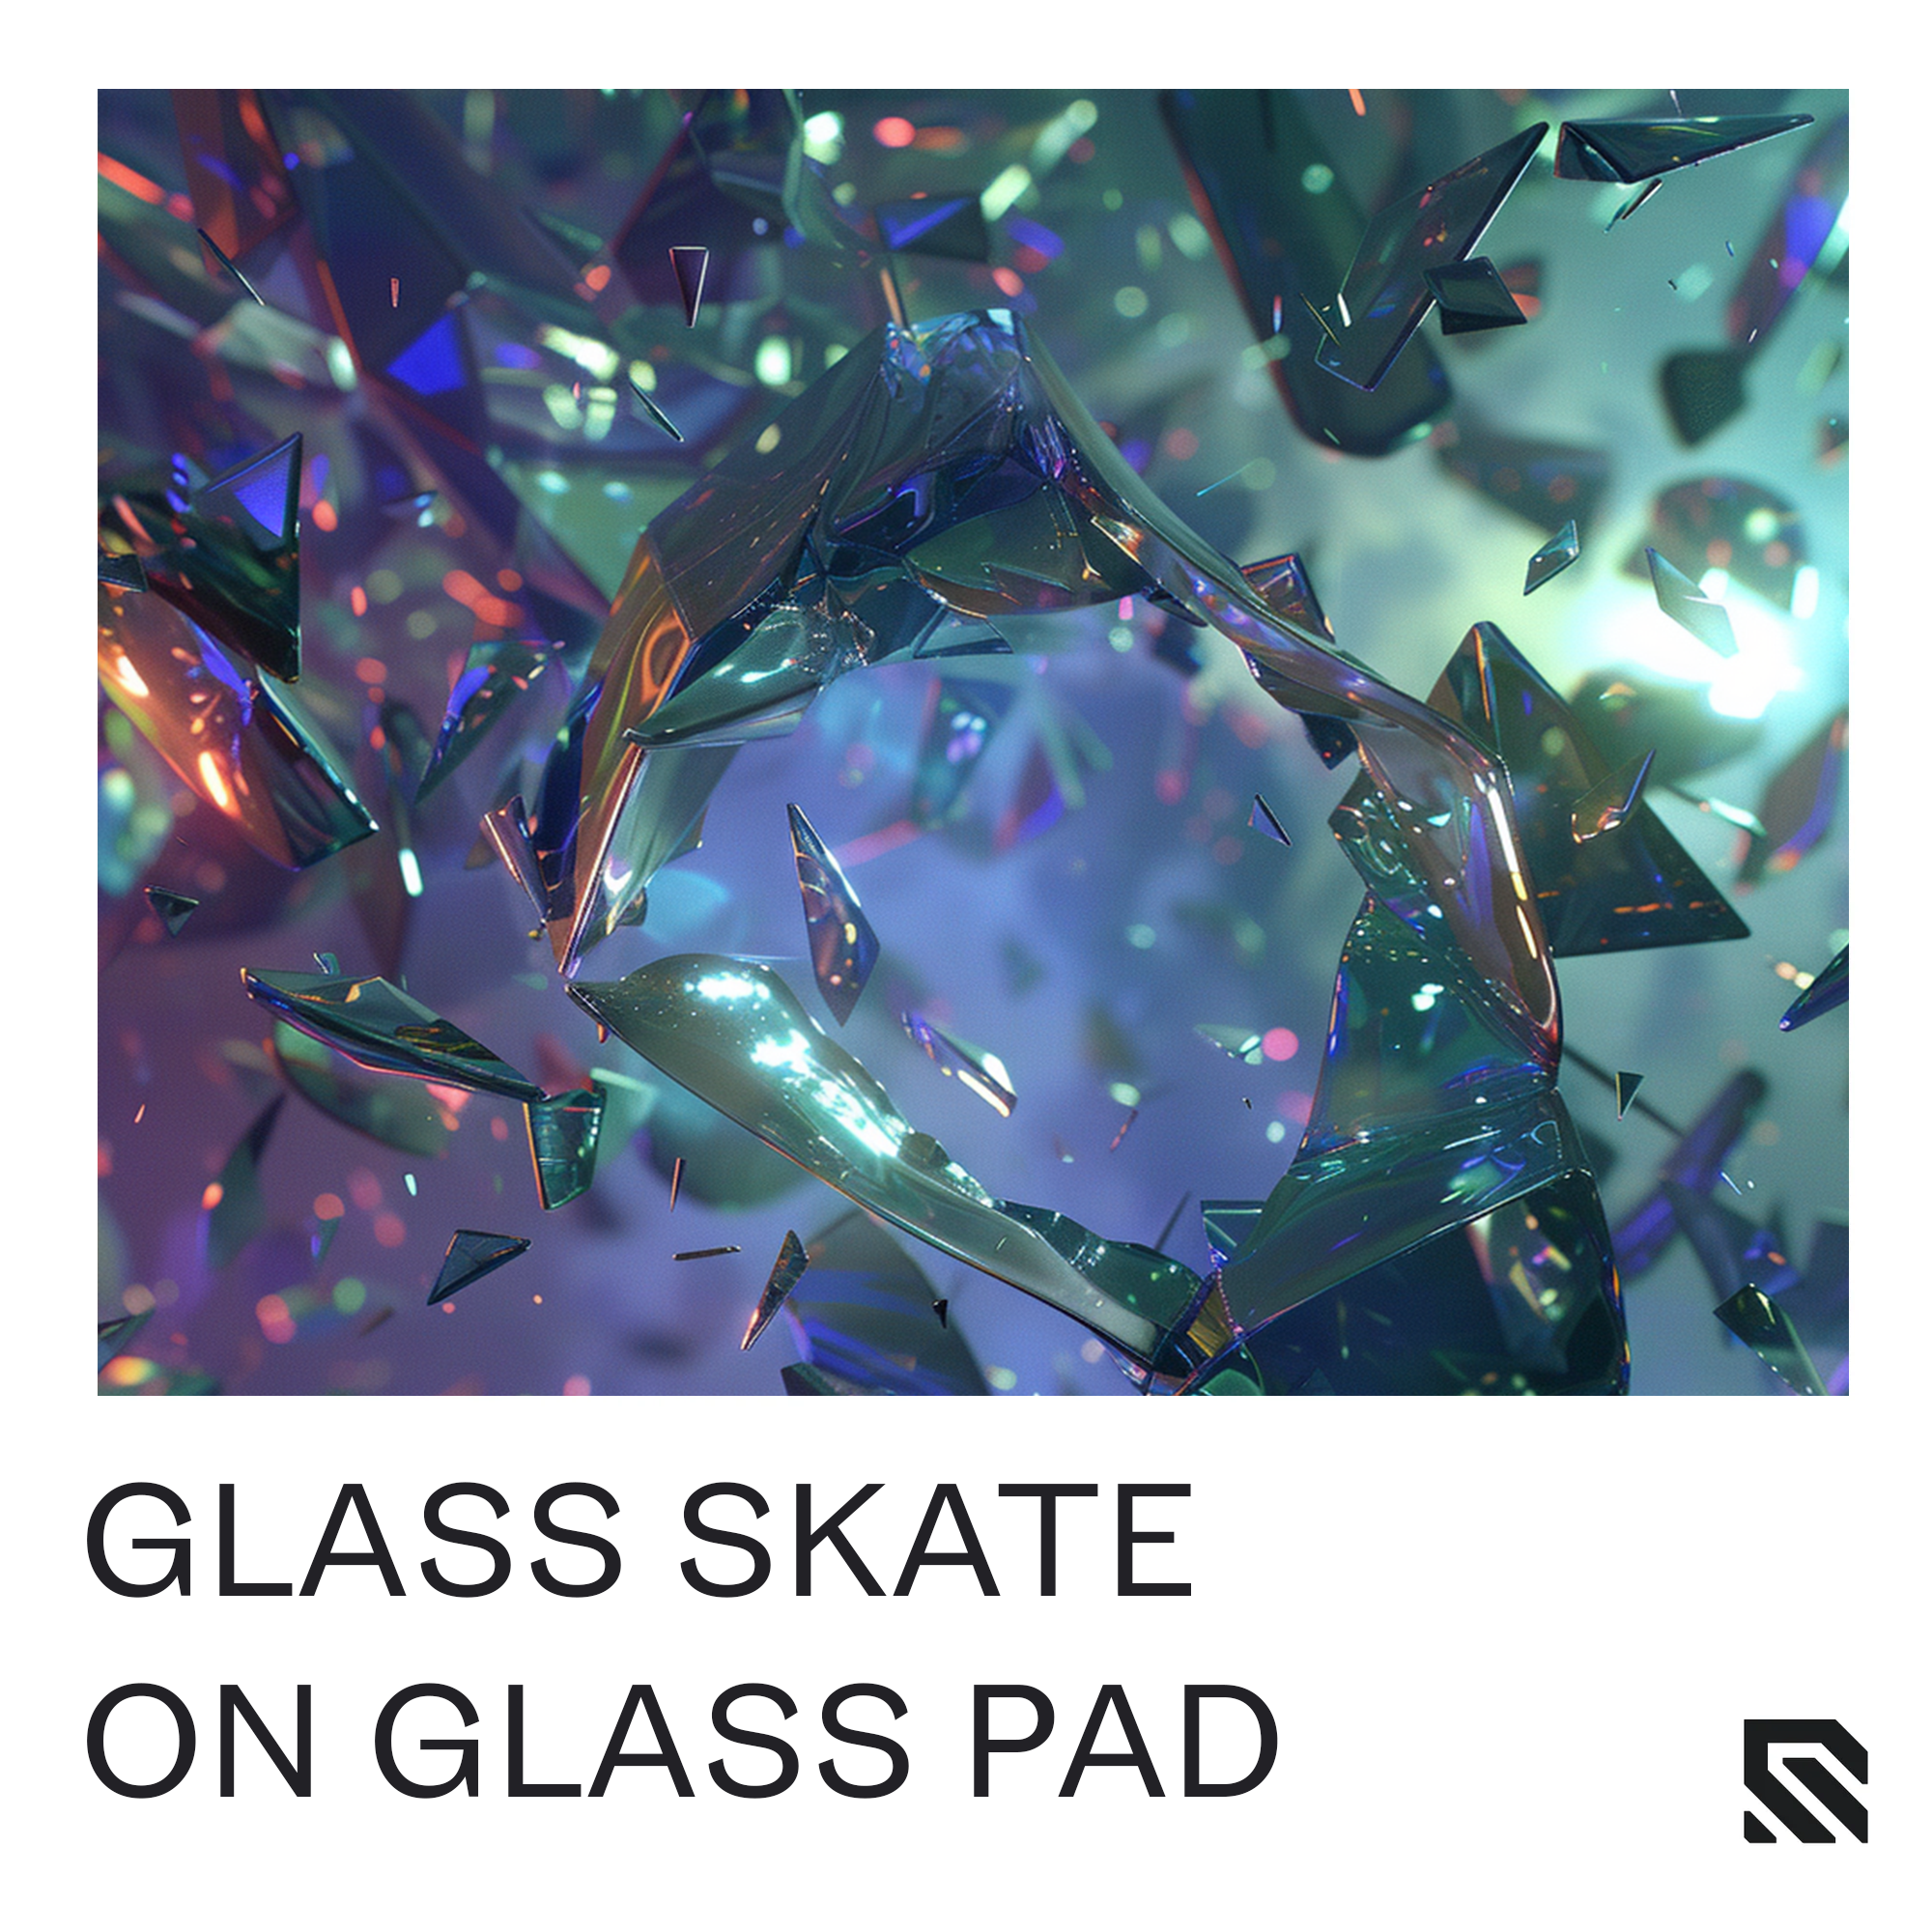 wallhack Glass skates on glass mouse pad damage shattered broken glass